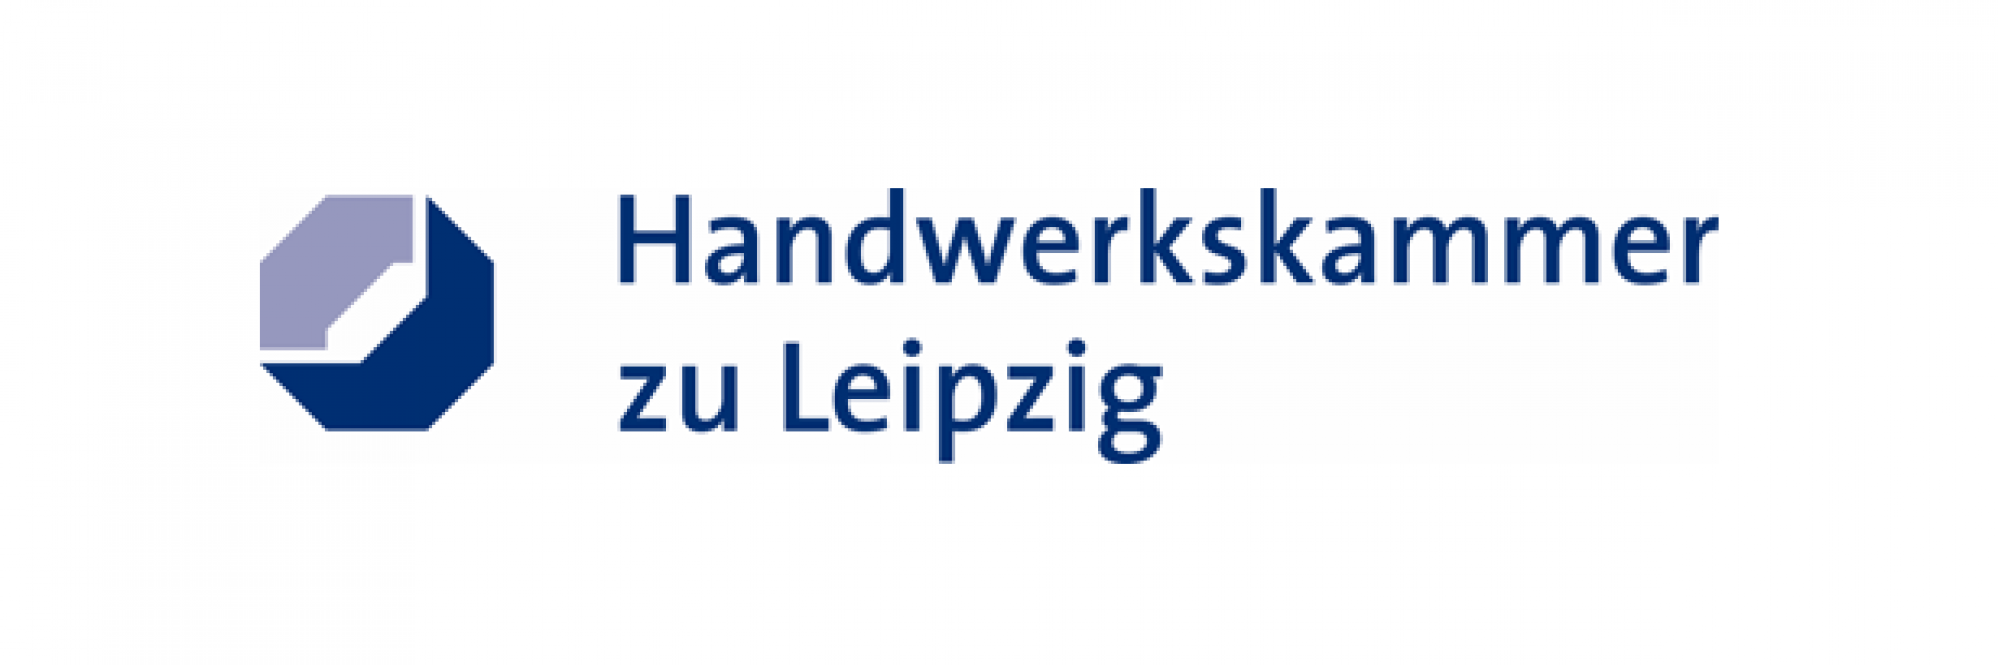 Handwerkskammer Leipzig